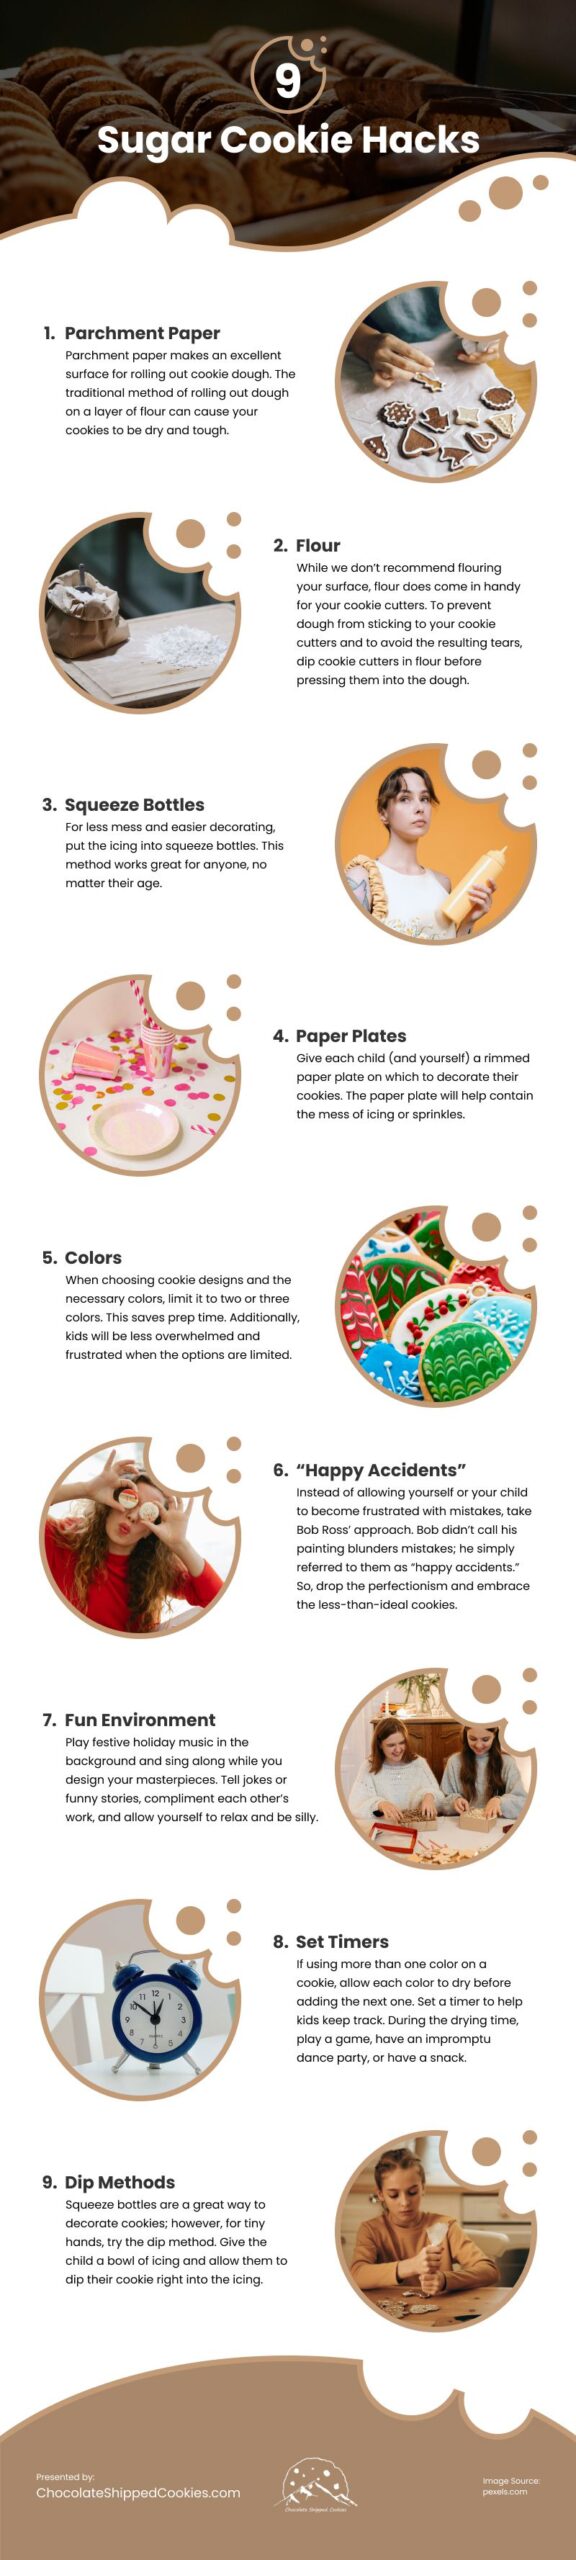 9 Sugar Cookie Hacks Infographic